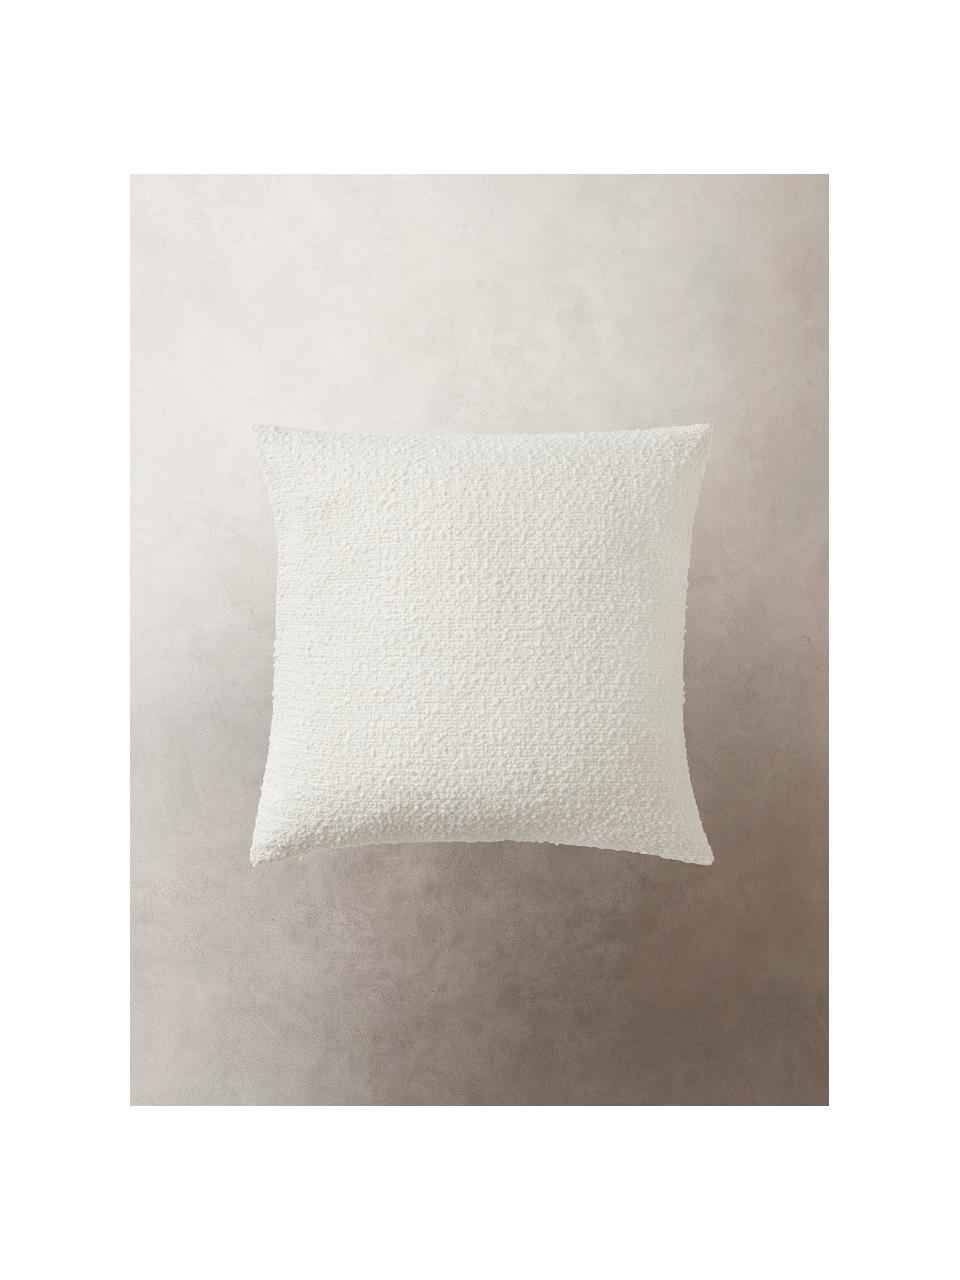 Bouclé-Kissenhülle Coda in Weiß, 97% Polyester, 3% Acryl, Weiß, B 50 x L 50 cm